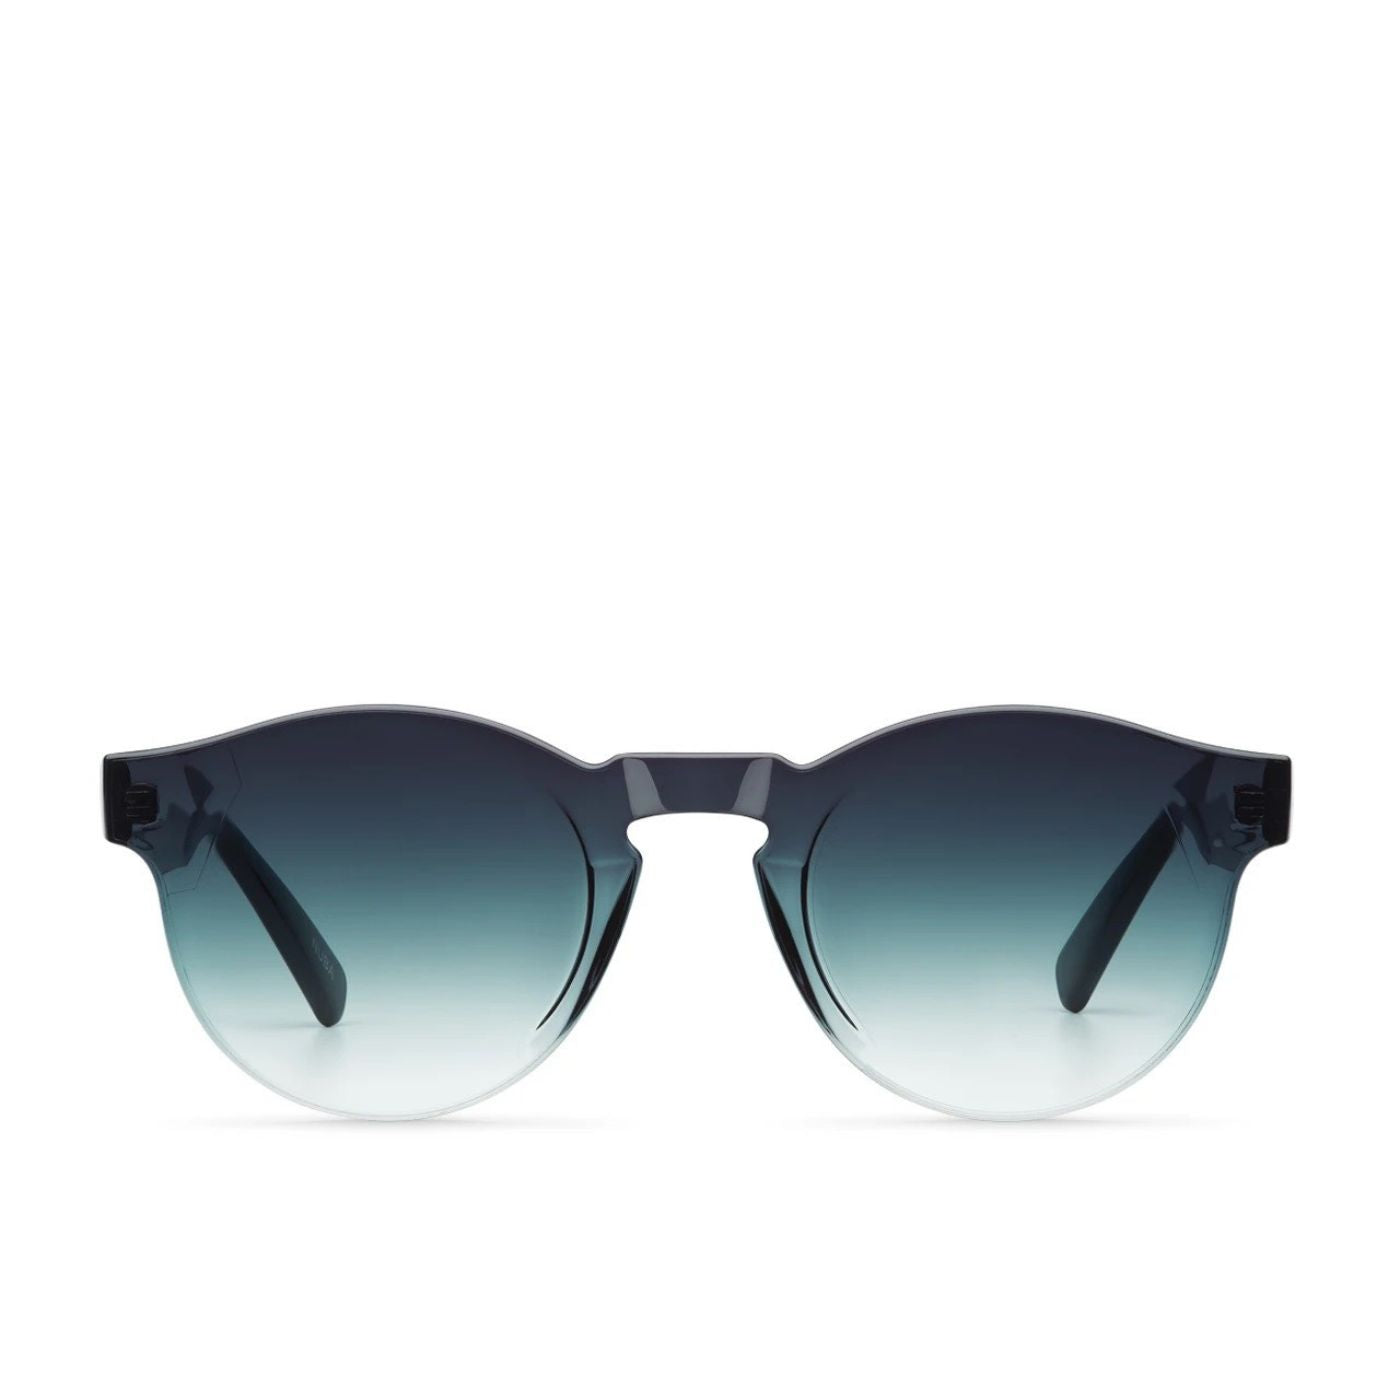 Nuba Forest Meller sunglasses